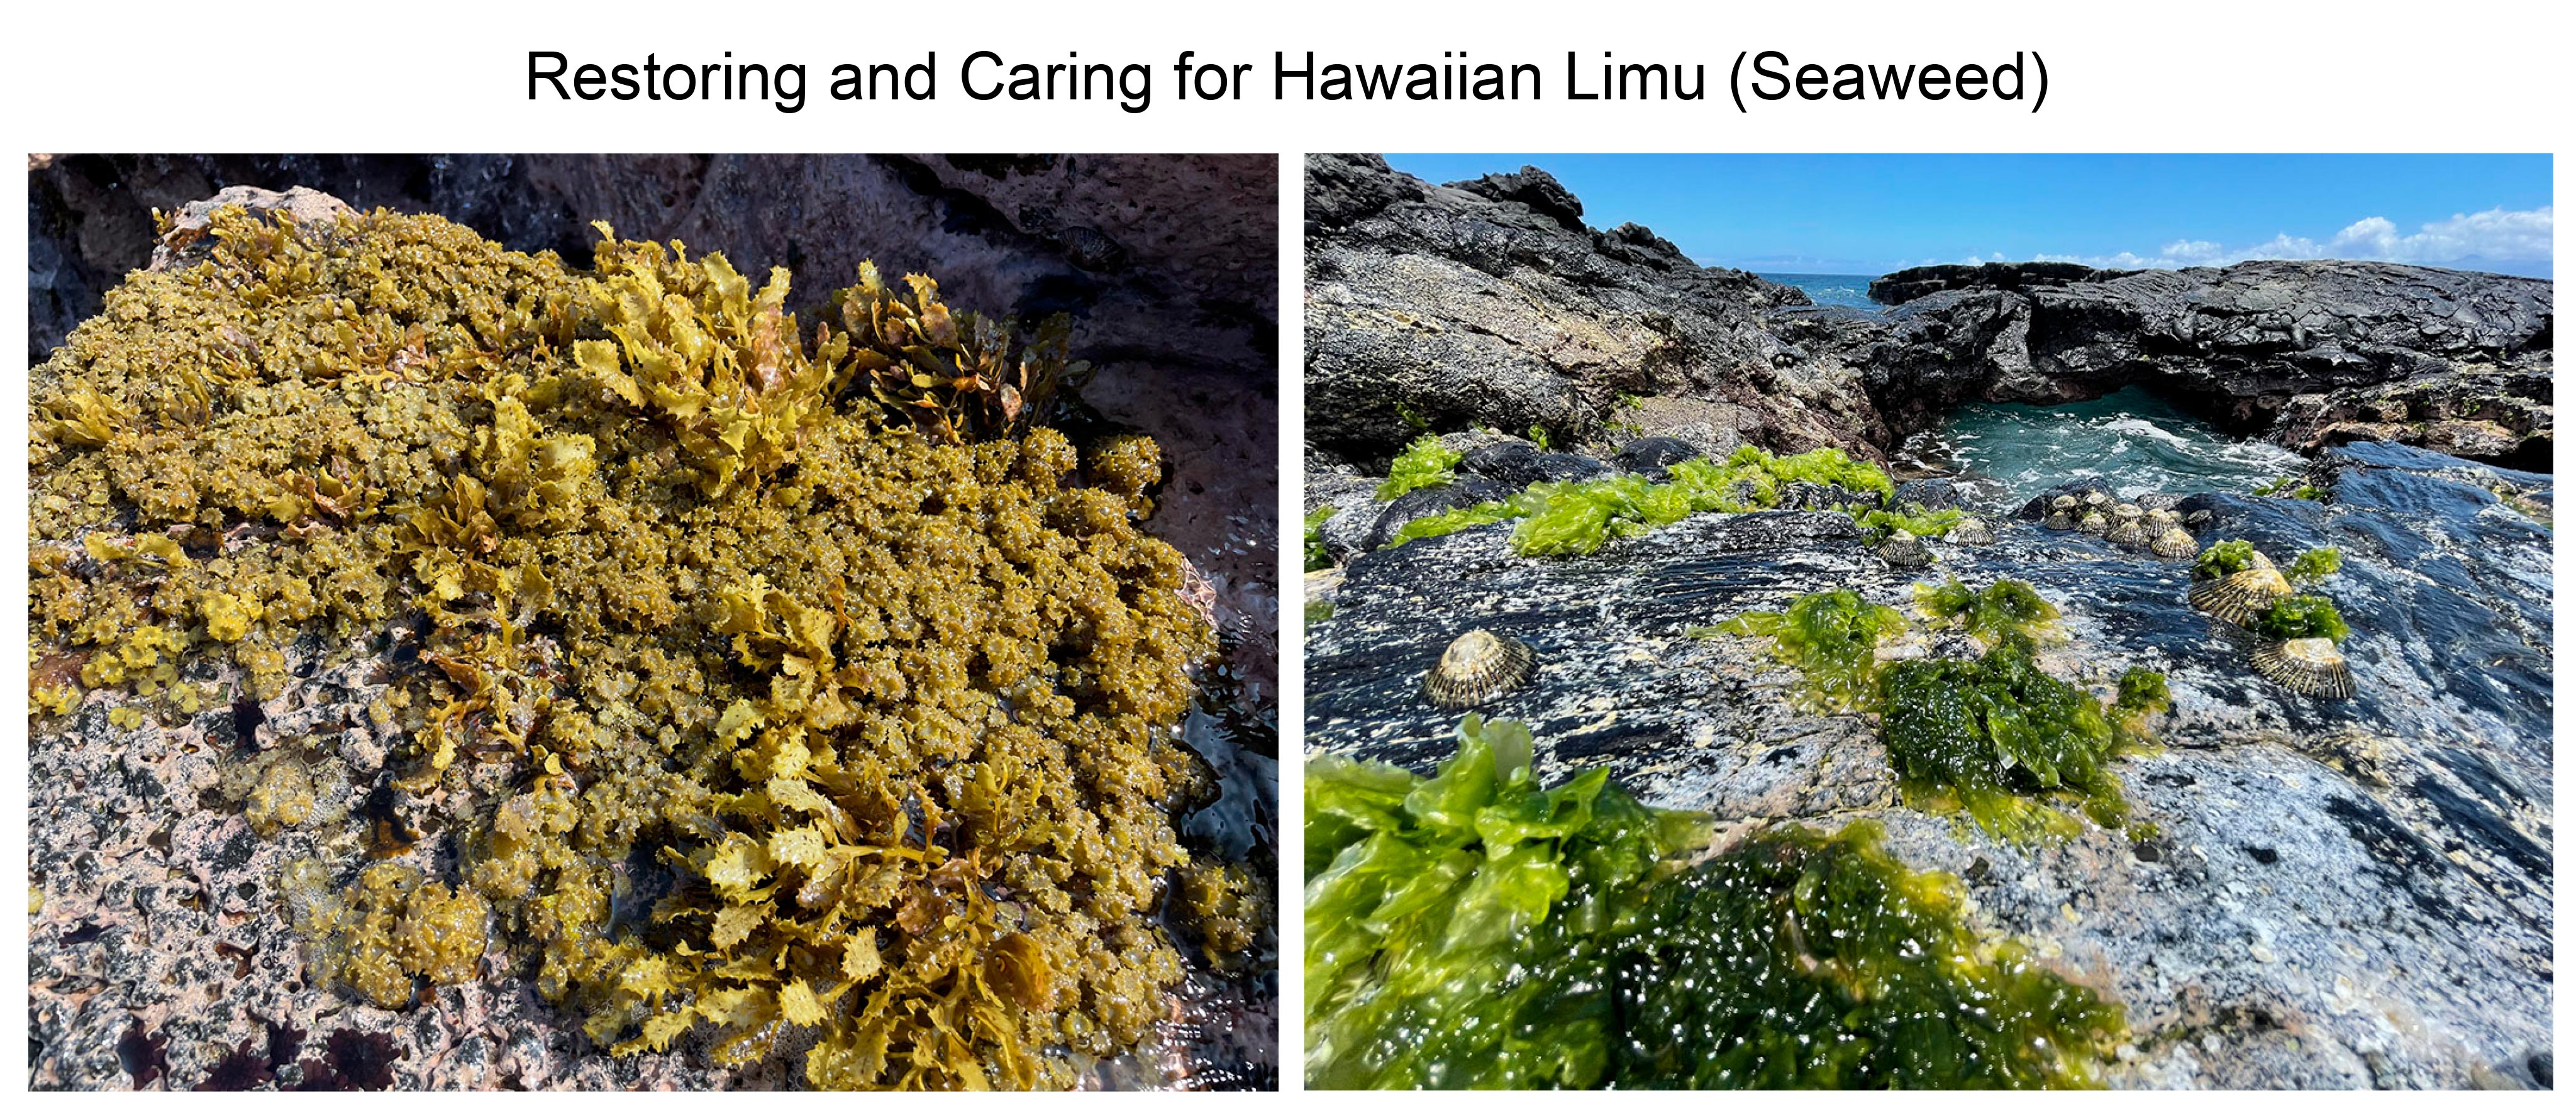 Restoring and Caring for Hawaiian Limu (Seaweed)